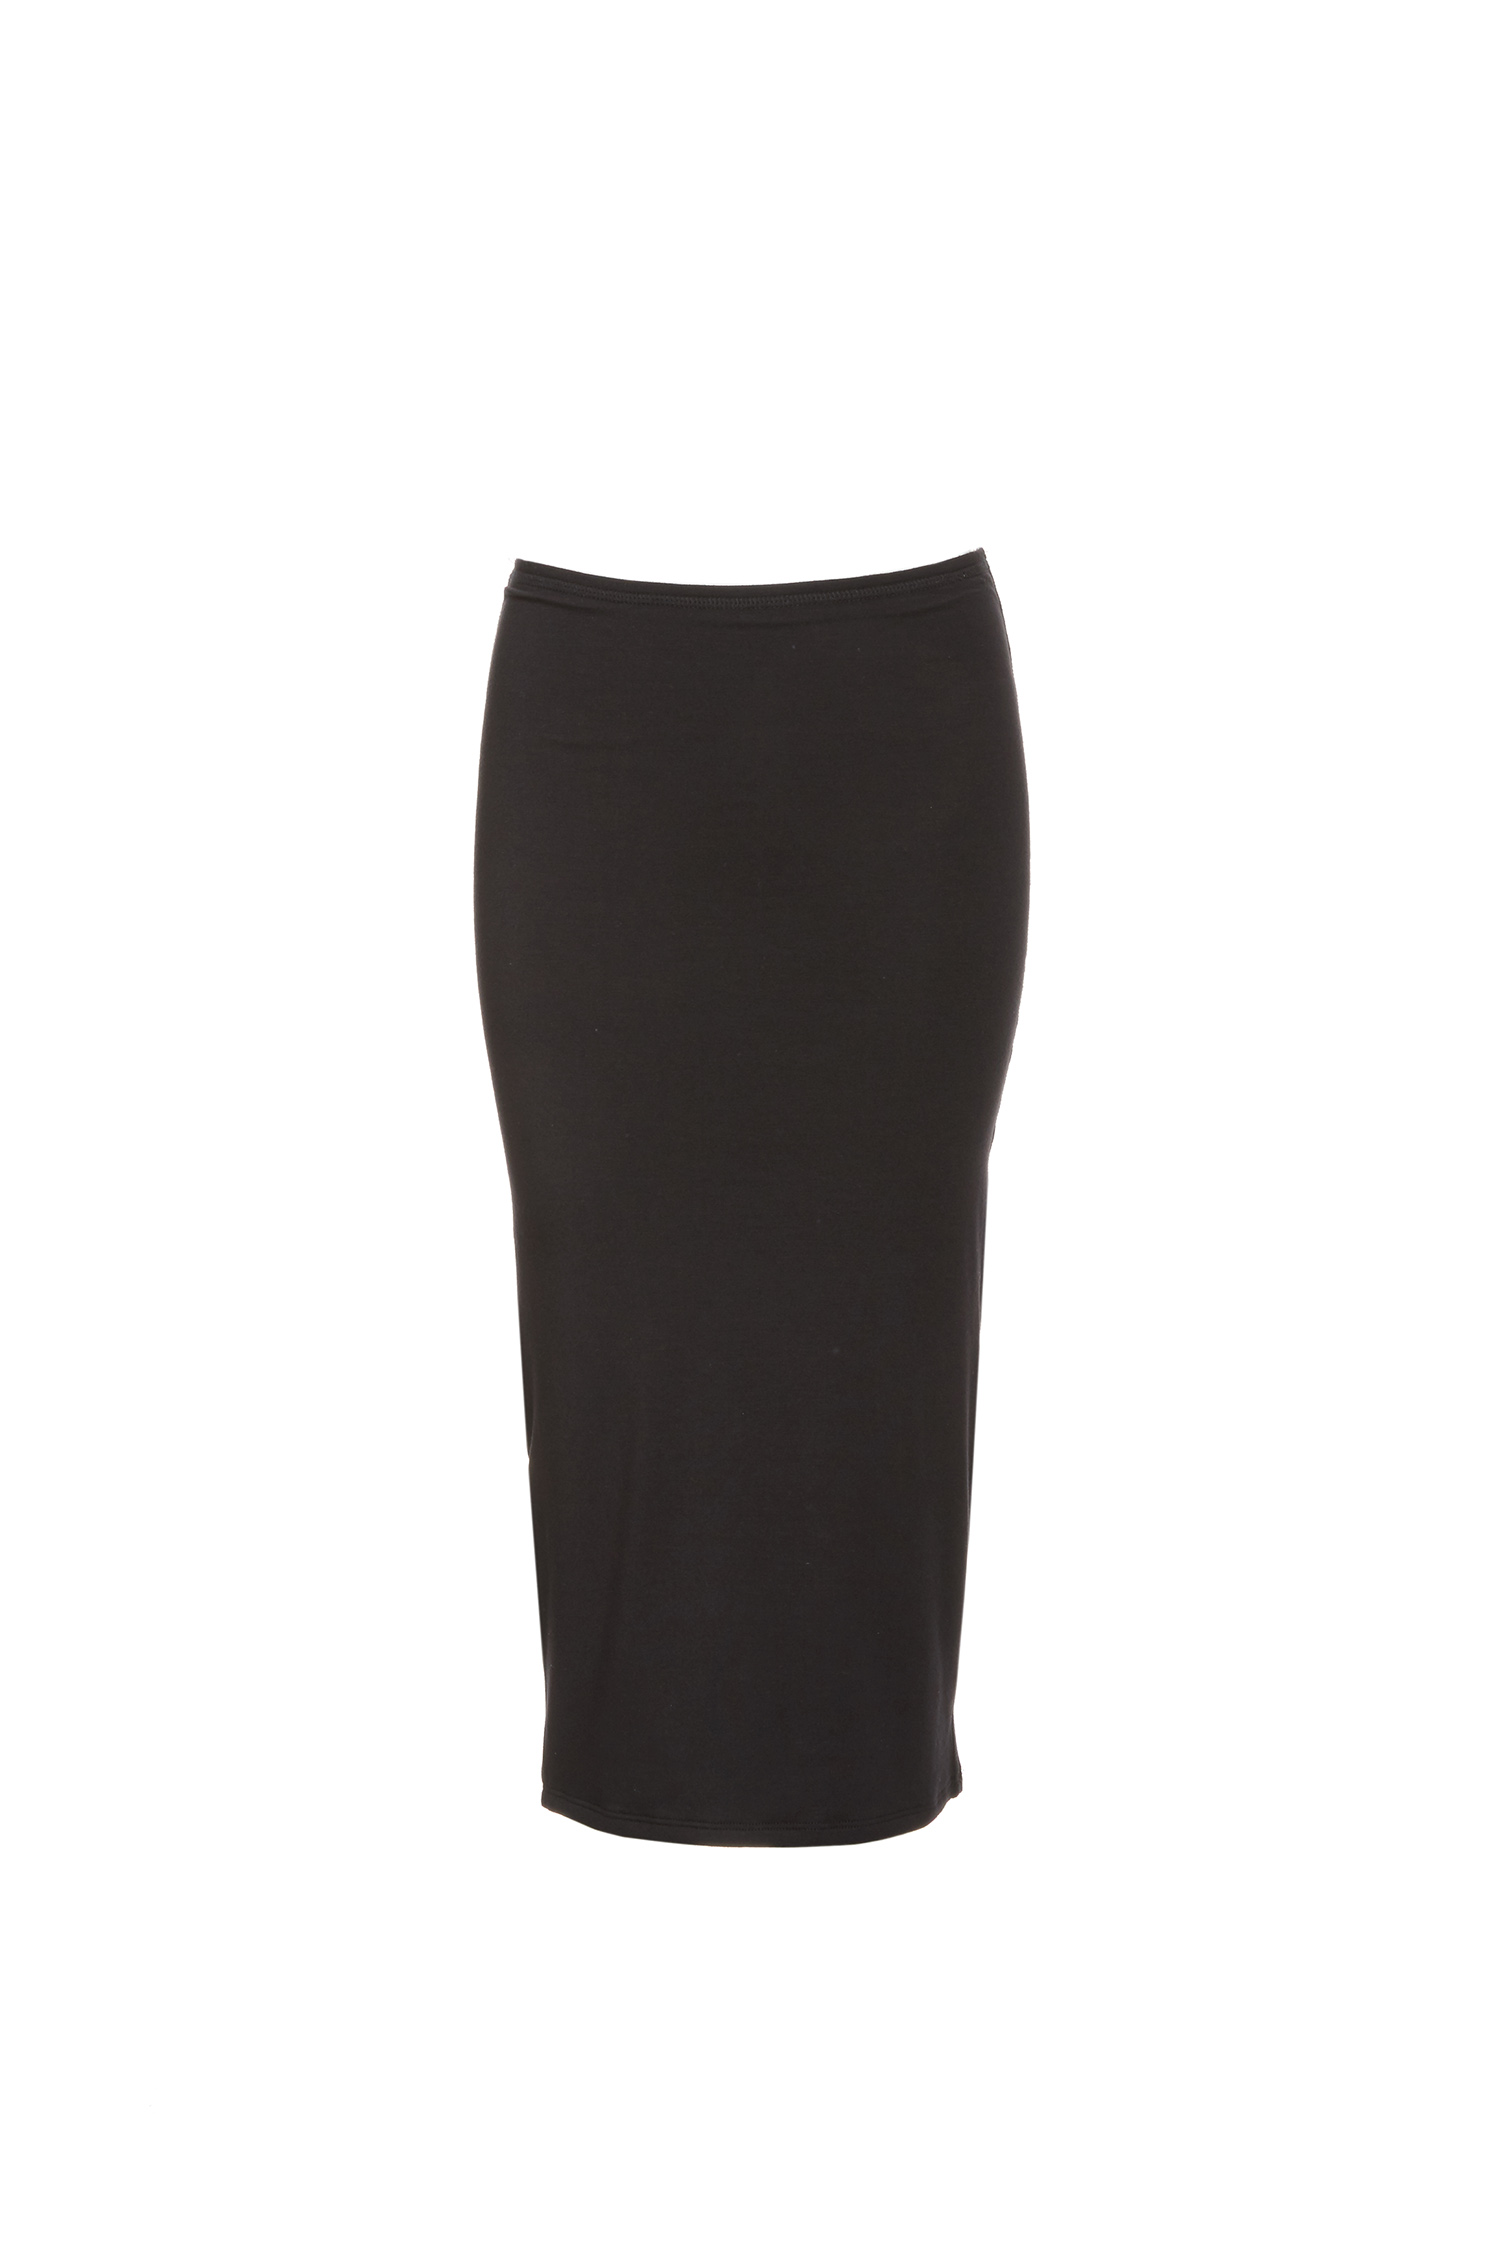 Michael Stars Convertible Jersey Skirt in Black | DAILYLOOK